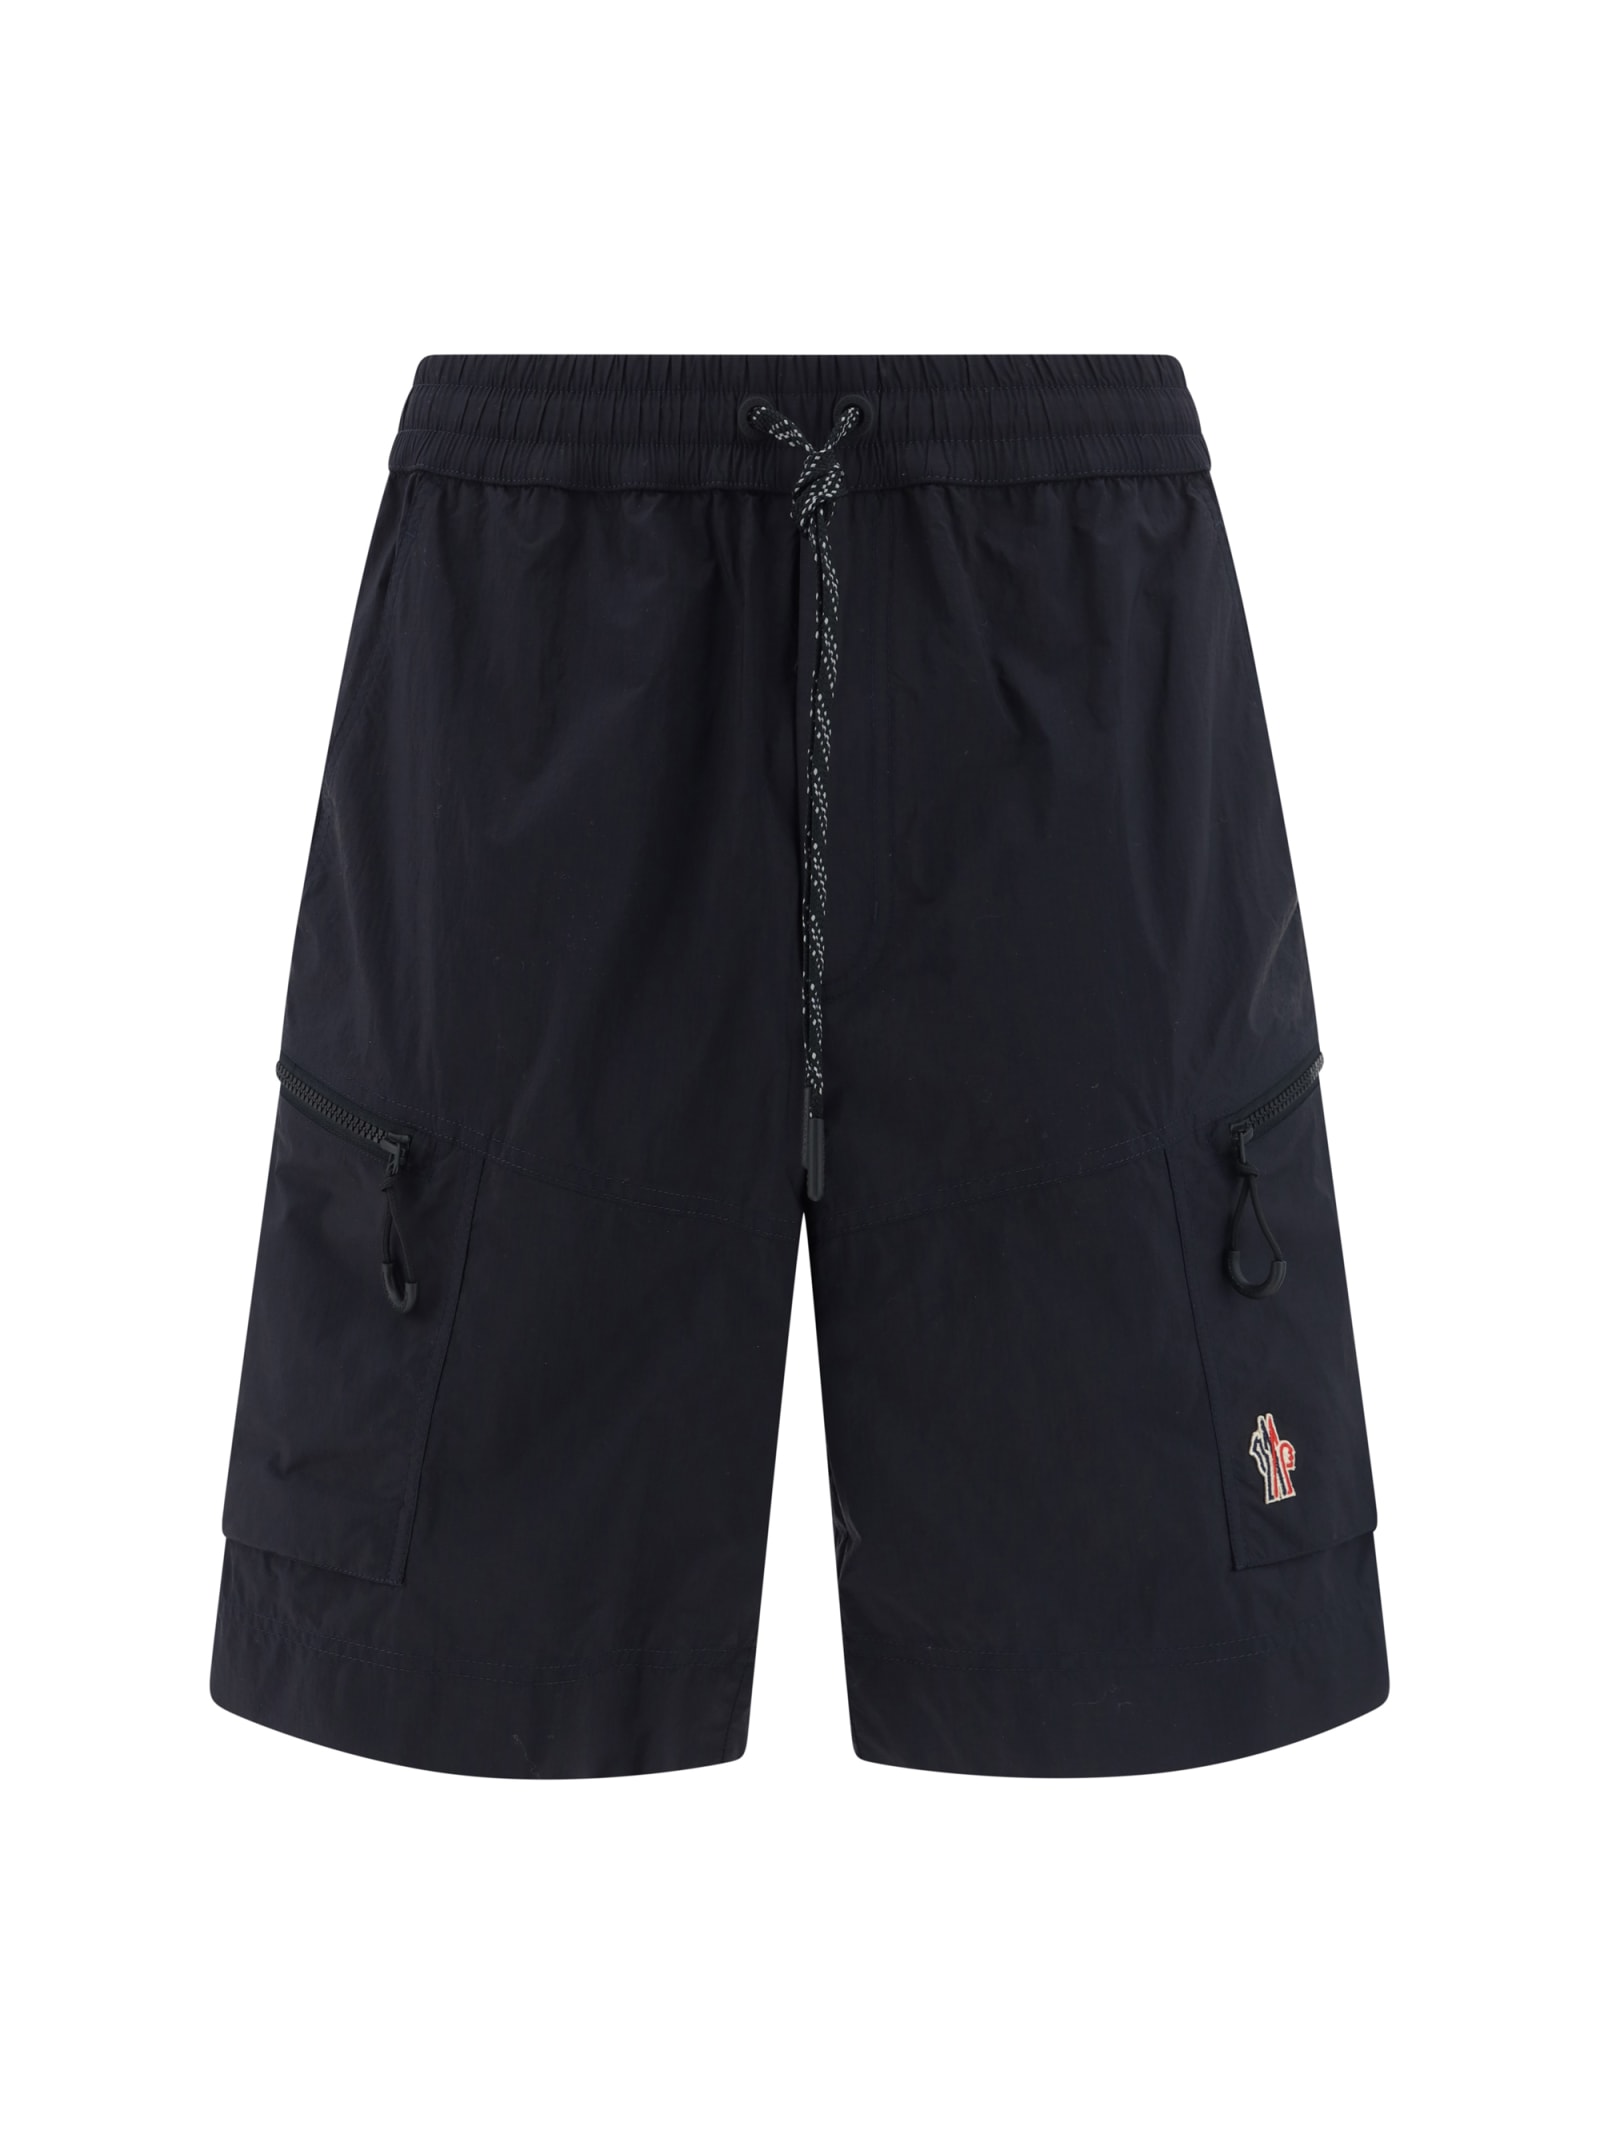 Moncler Grenoble Shorts